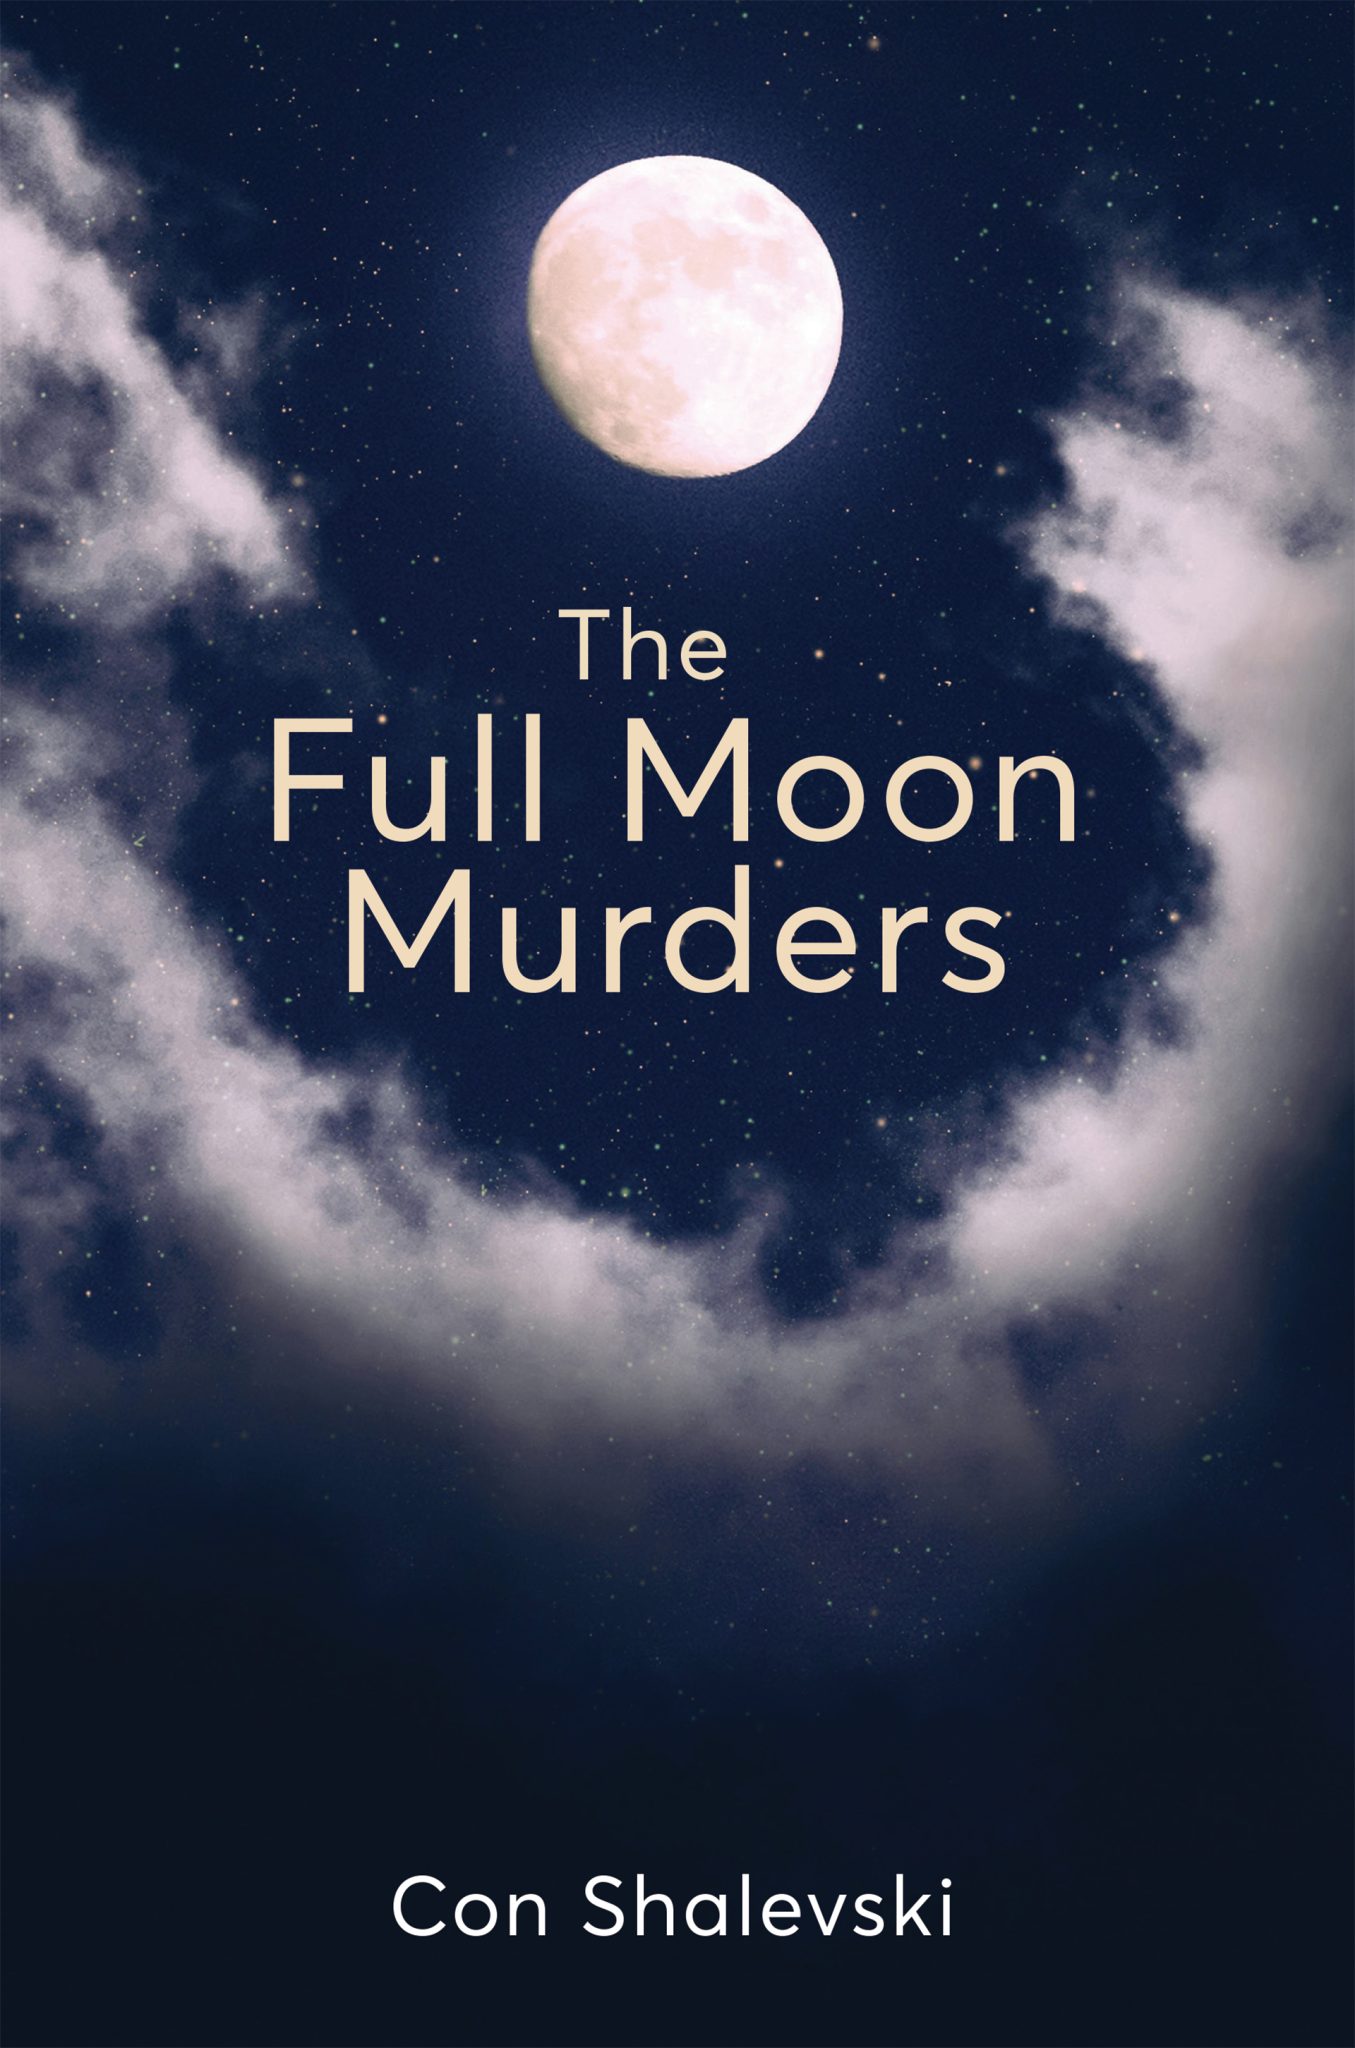 The Full Moon Murders